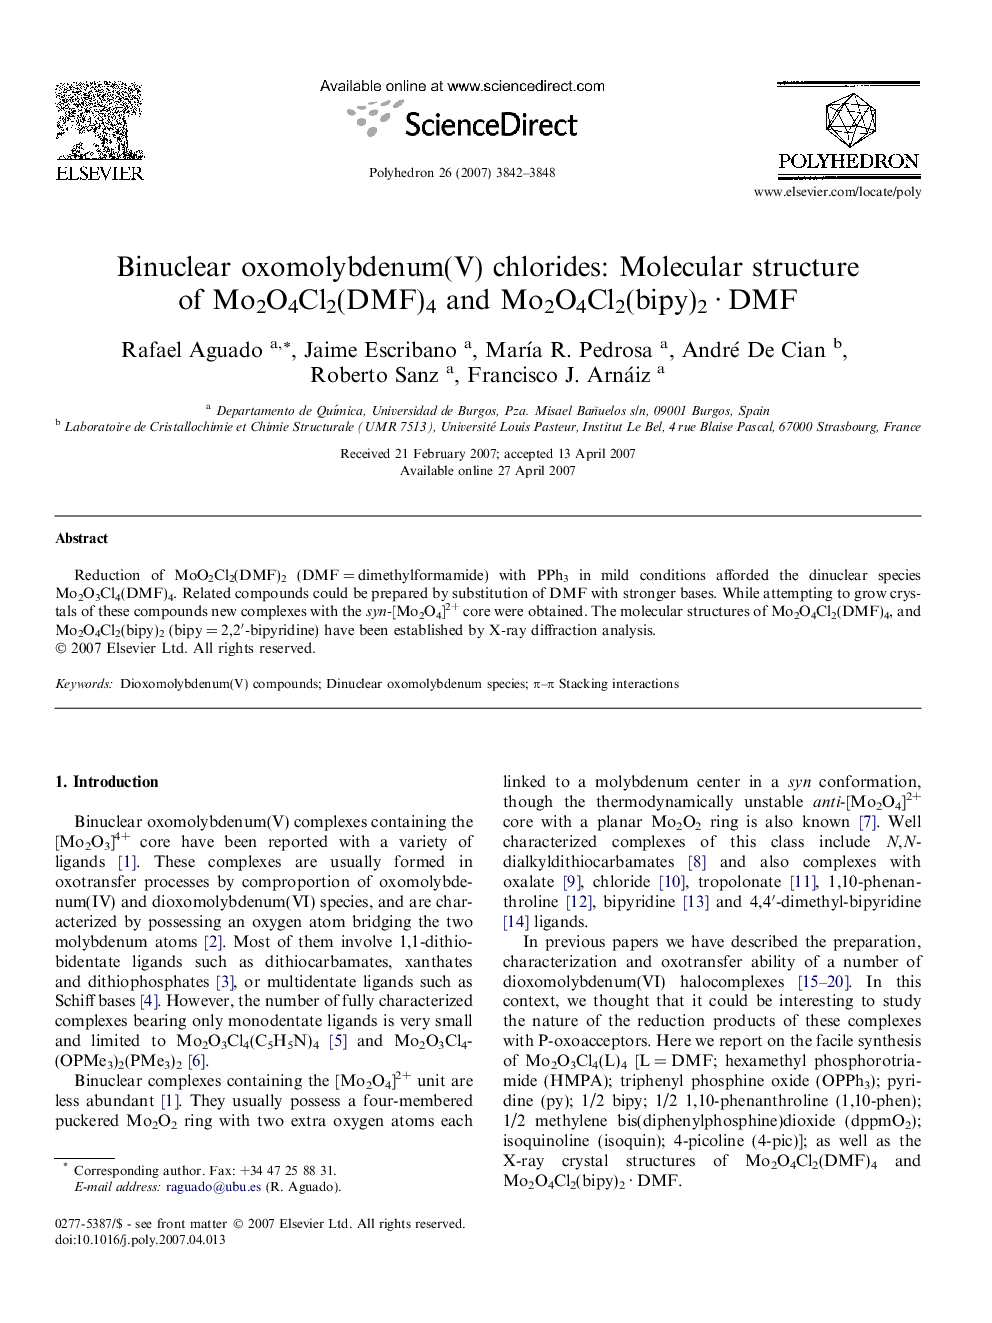 Binuclear oxomolybdenum(V) chlorides: Molecular structure of Mo2O4Cl2(DMF)4 and Mo2O4Cl2(bipy)2Â Â·Â DMF